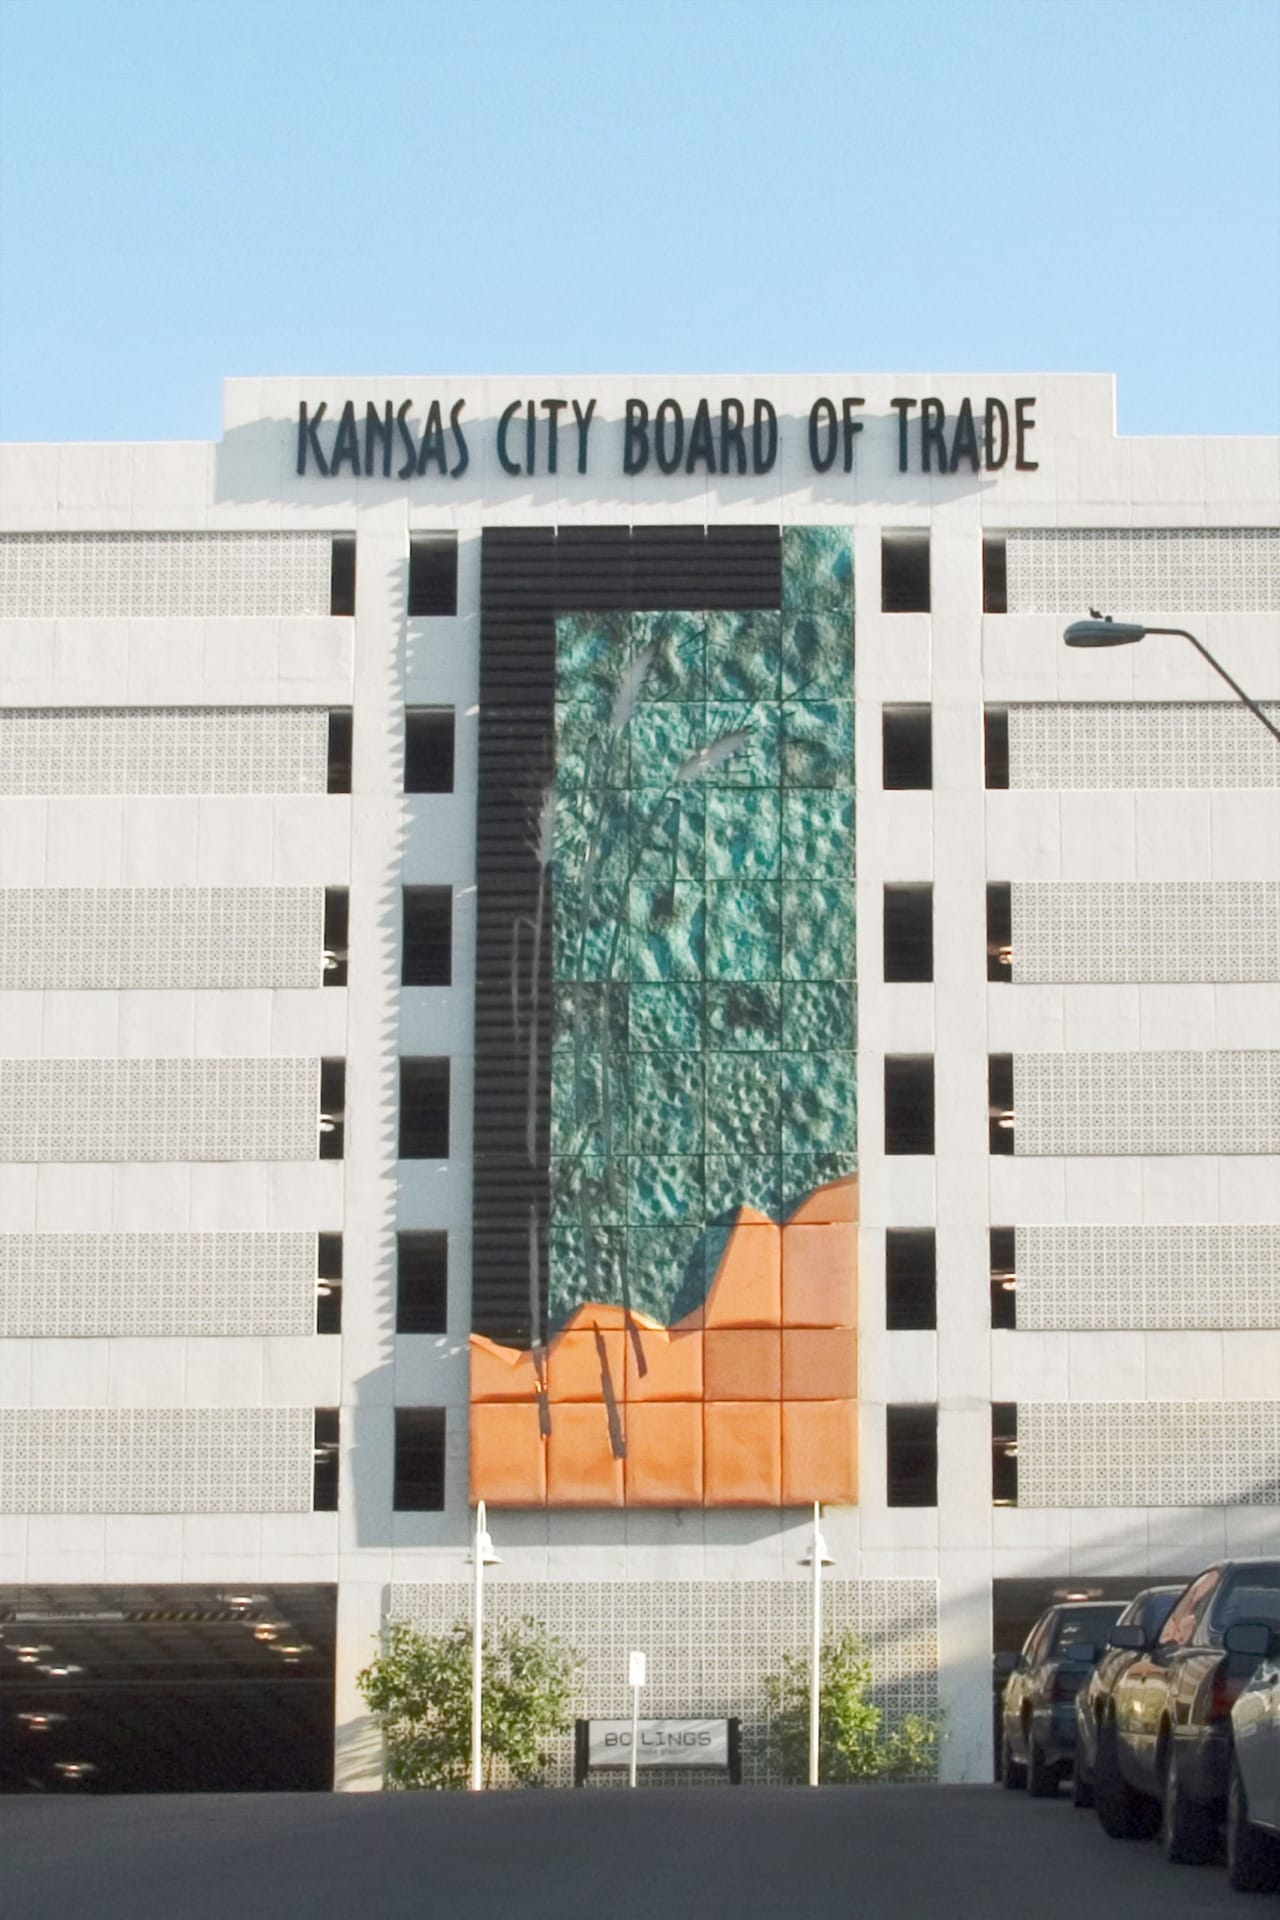 Heartland Harvest at the Kansas City Board of Trade.